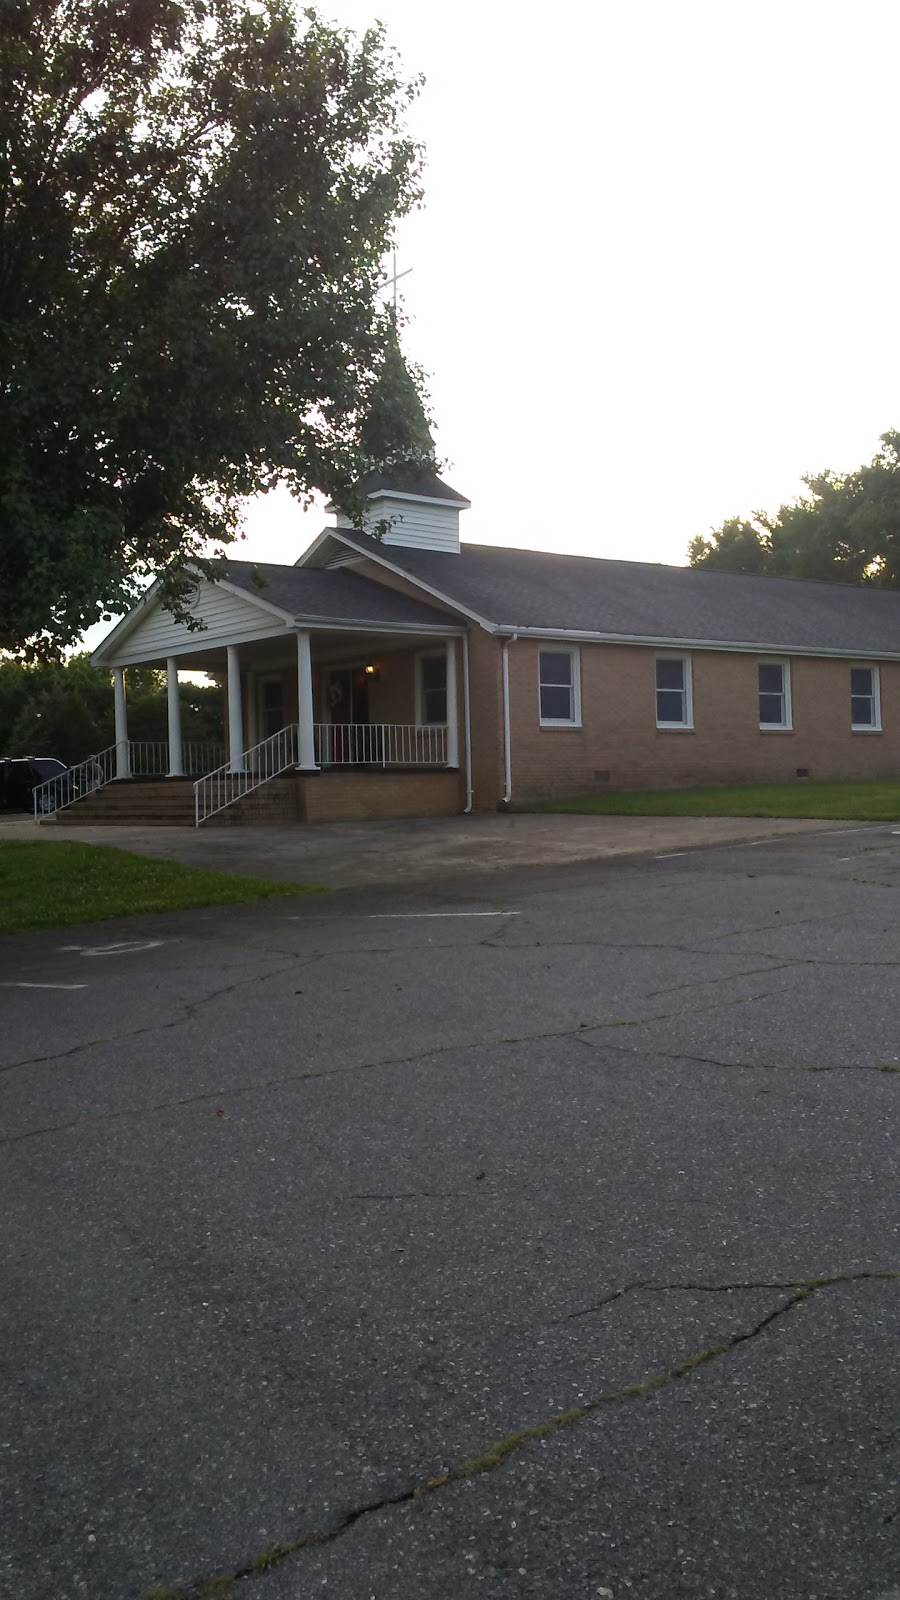 Gordon Heights independent Baptist Church | 510 NC-49, Concord, NC 28025, USA | Phone: (704) 782-1610